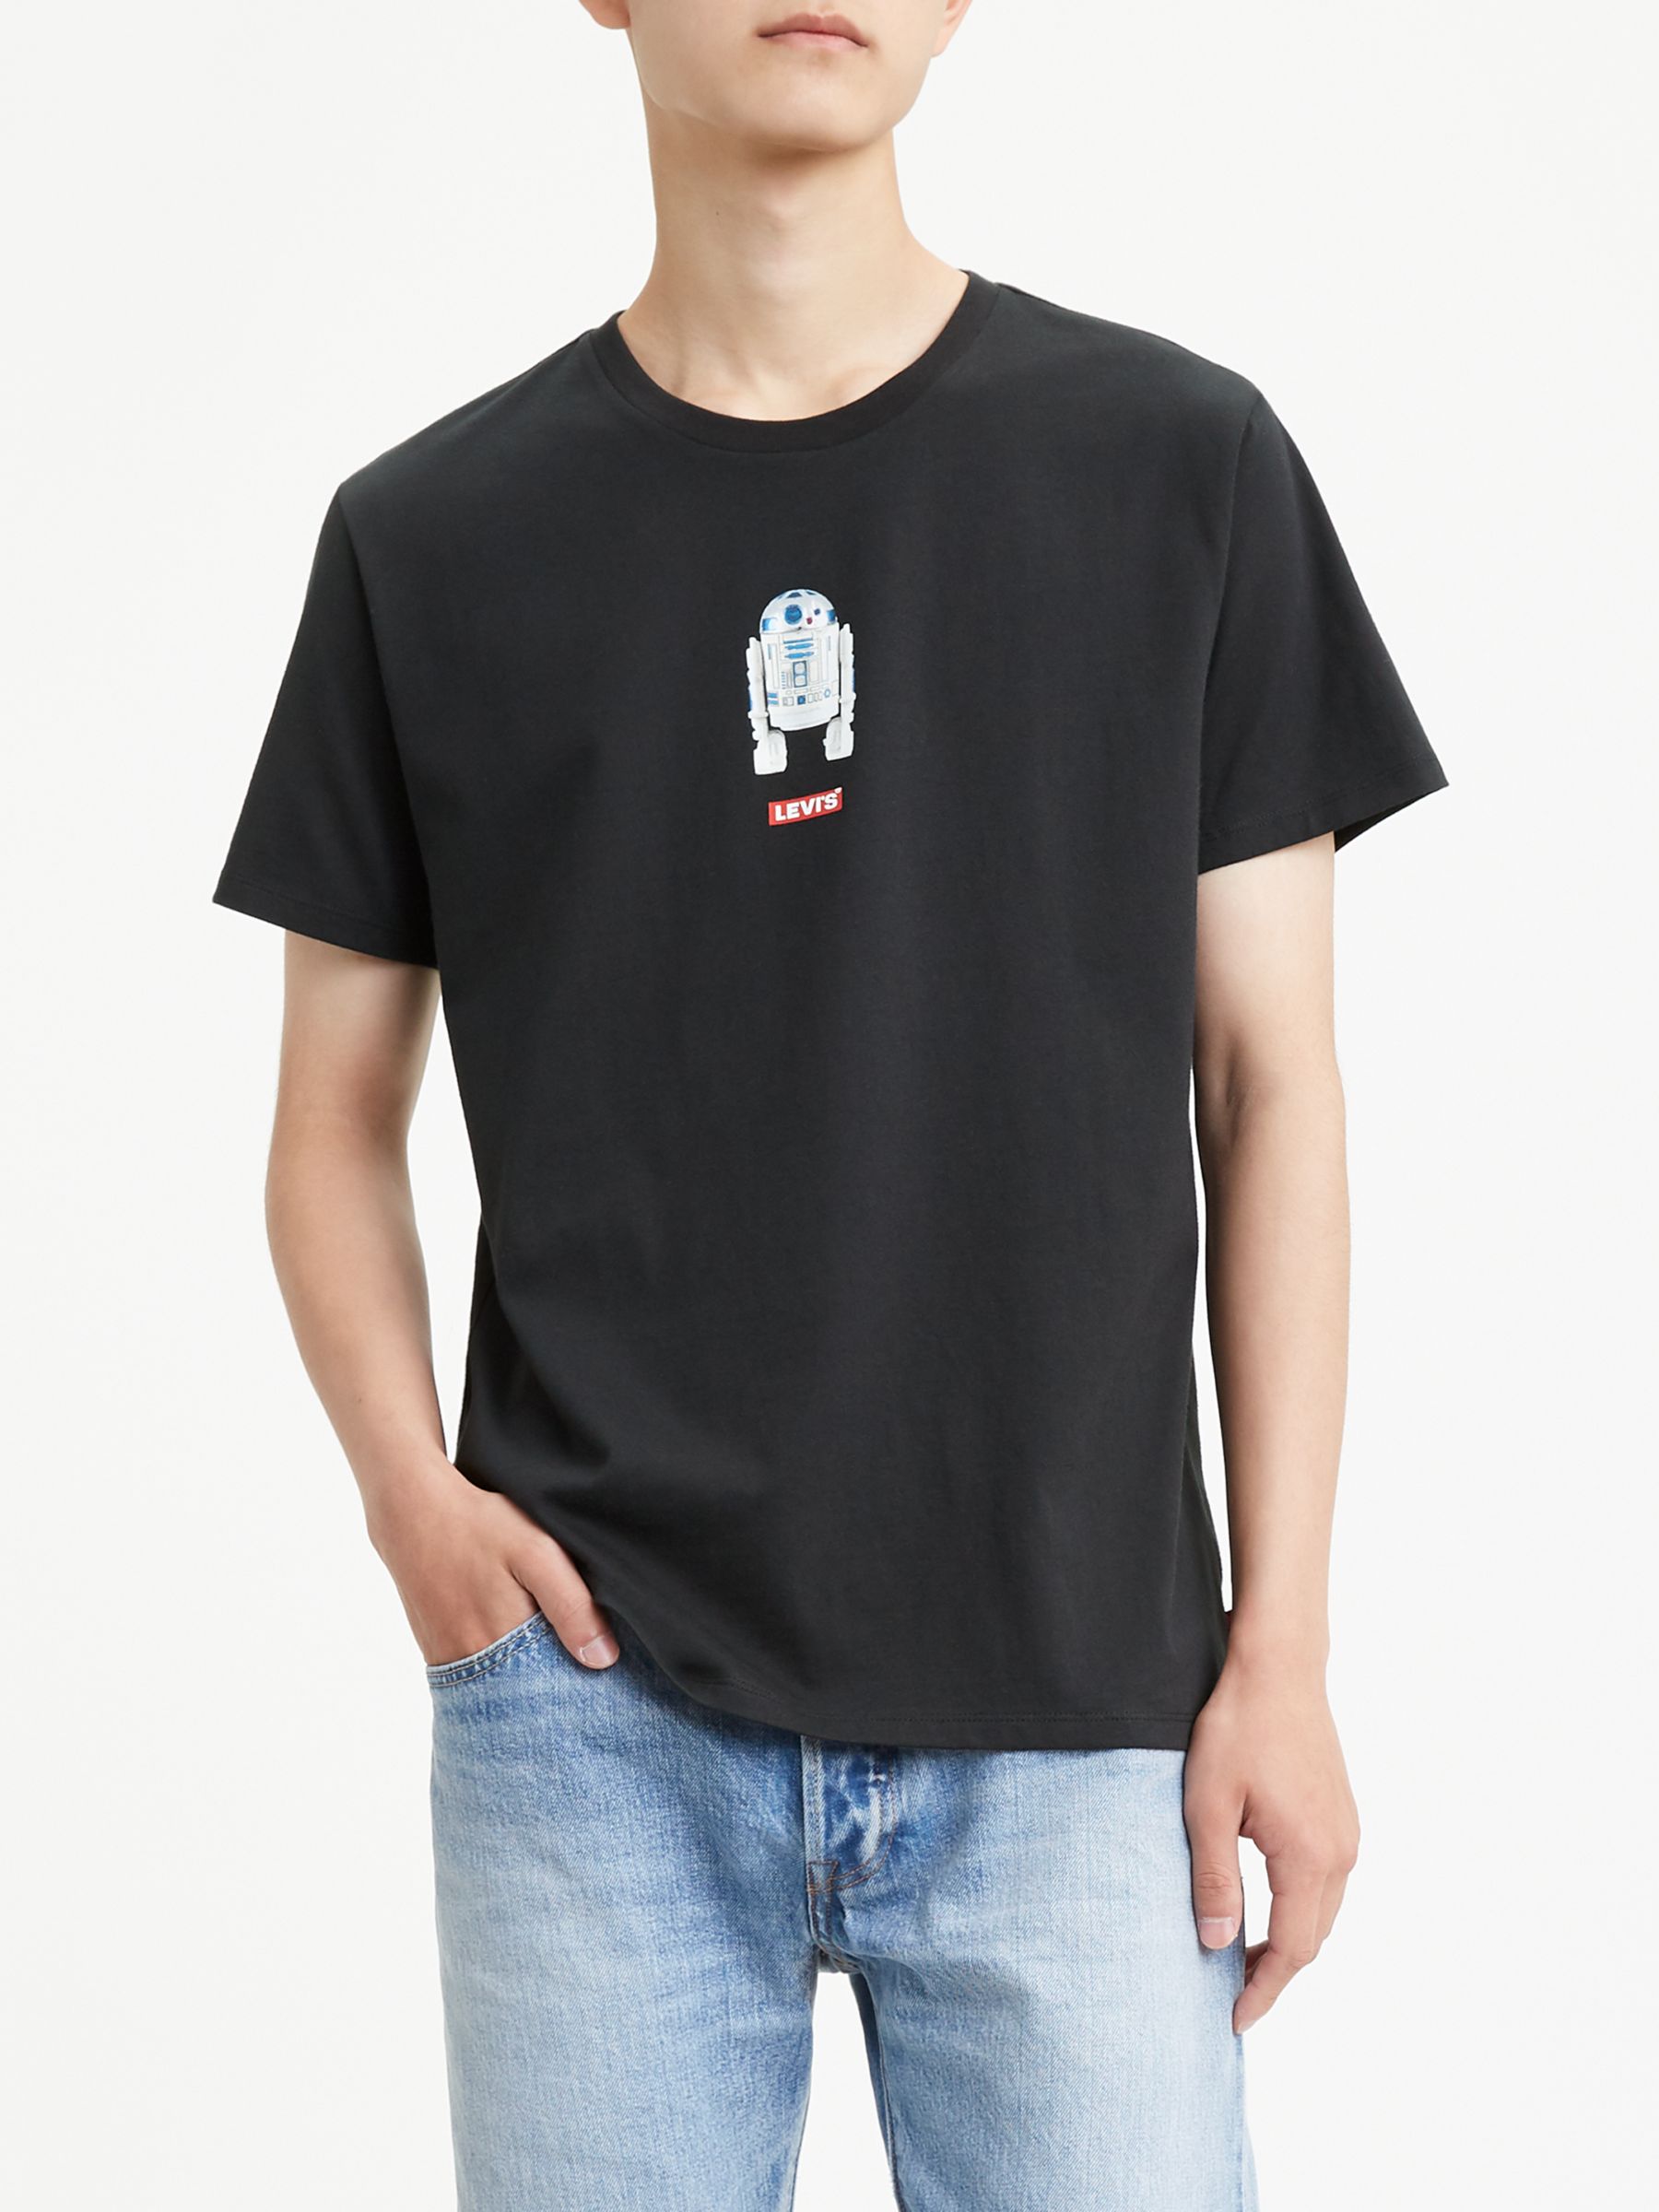 Levi's x Star Wars R2-D2 Graphic T-Shirt, Black